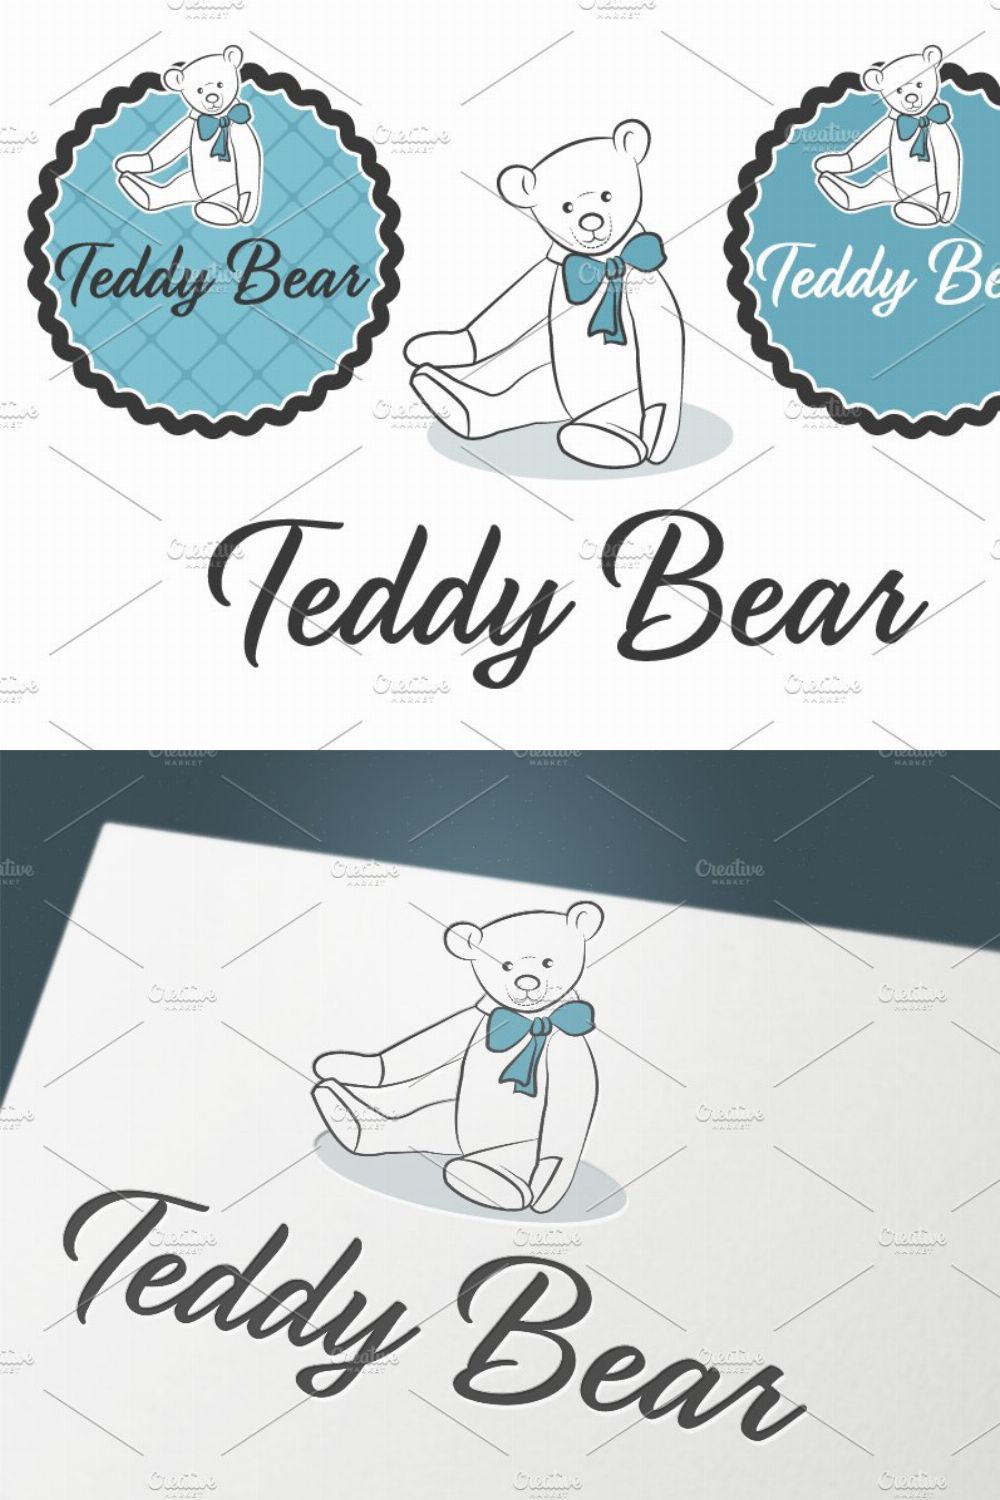 Teddy Bear pinterest preview image.